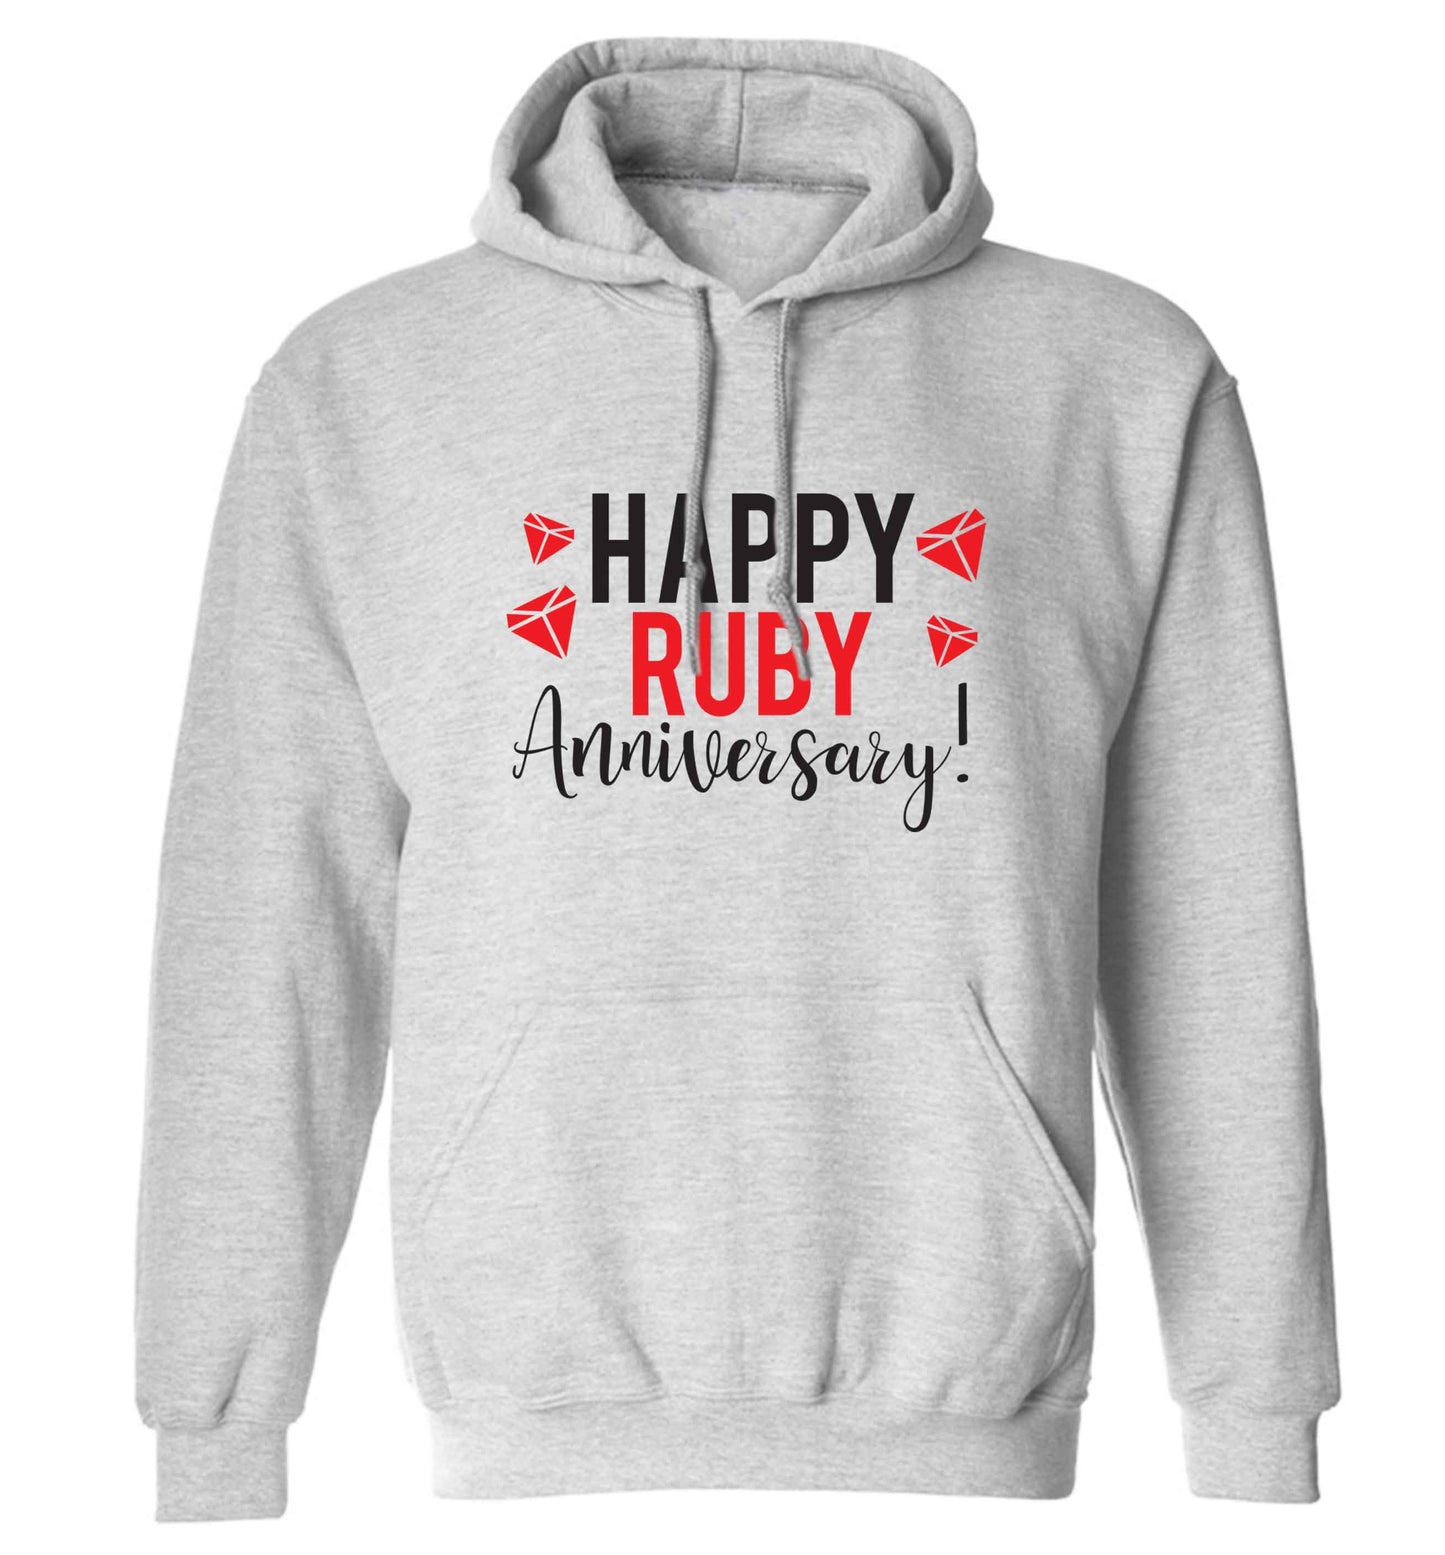 Happy ruby anniversary! adults unisex grey hoodie 2XL